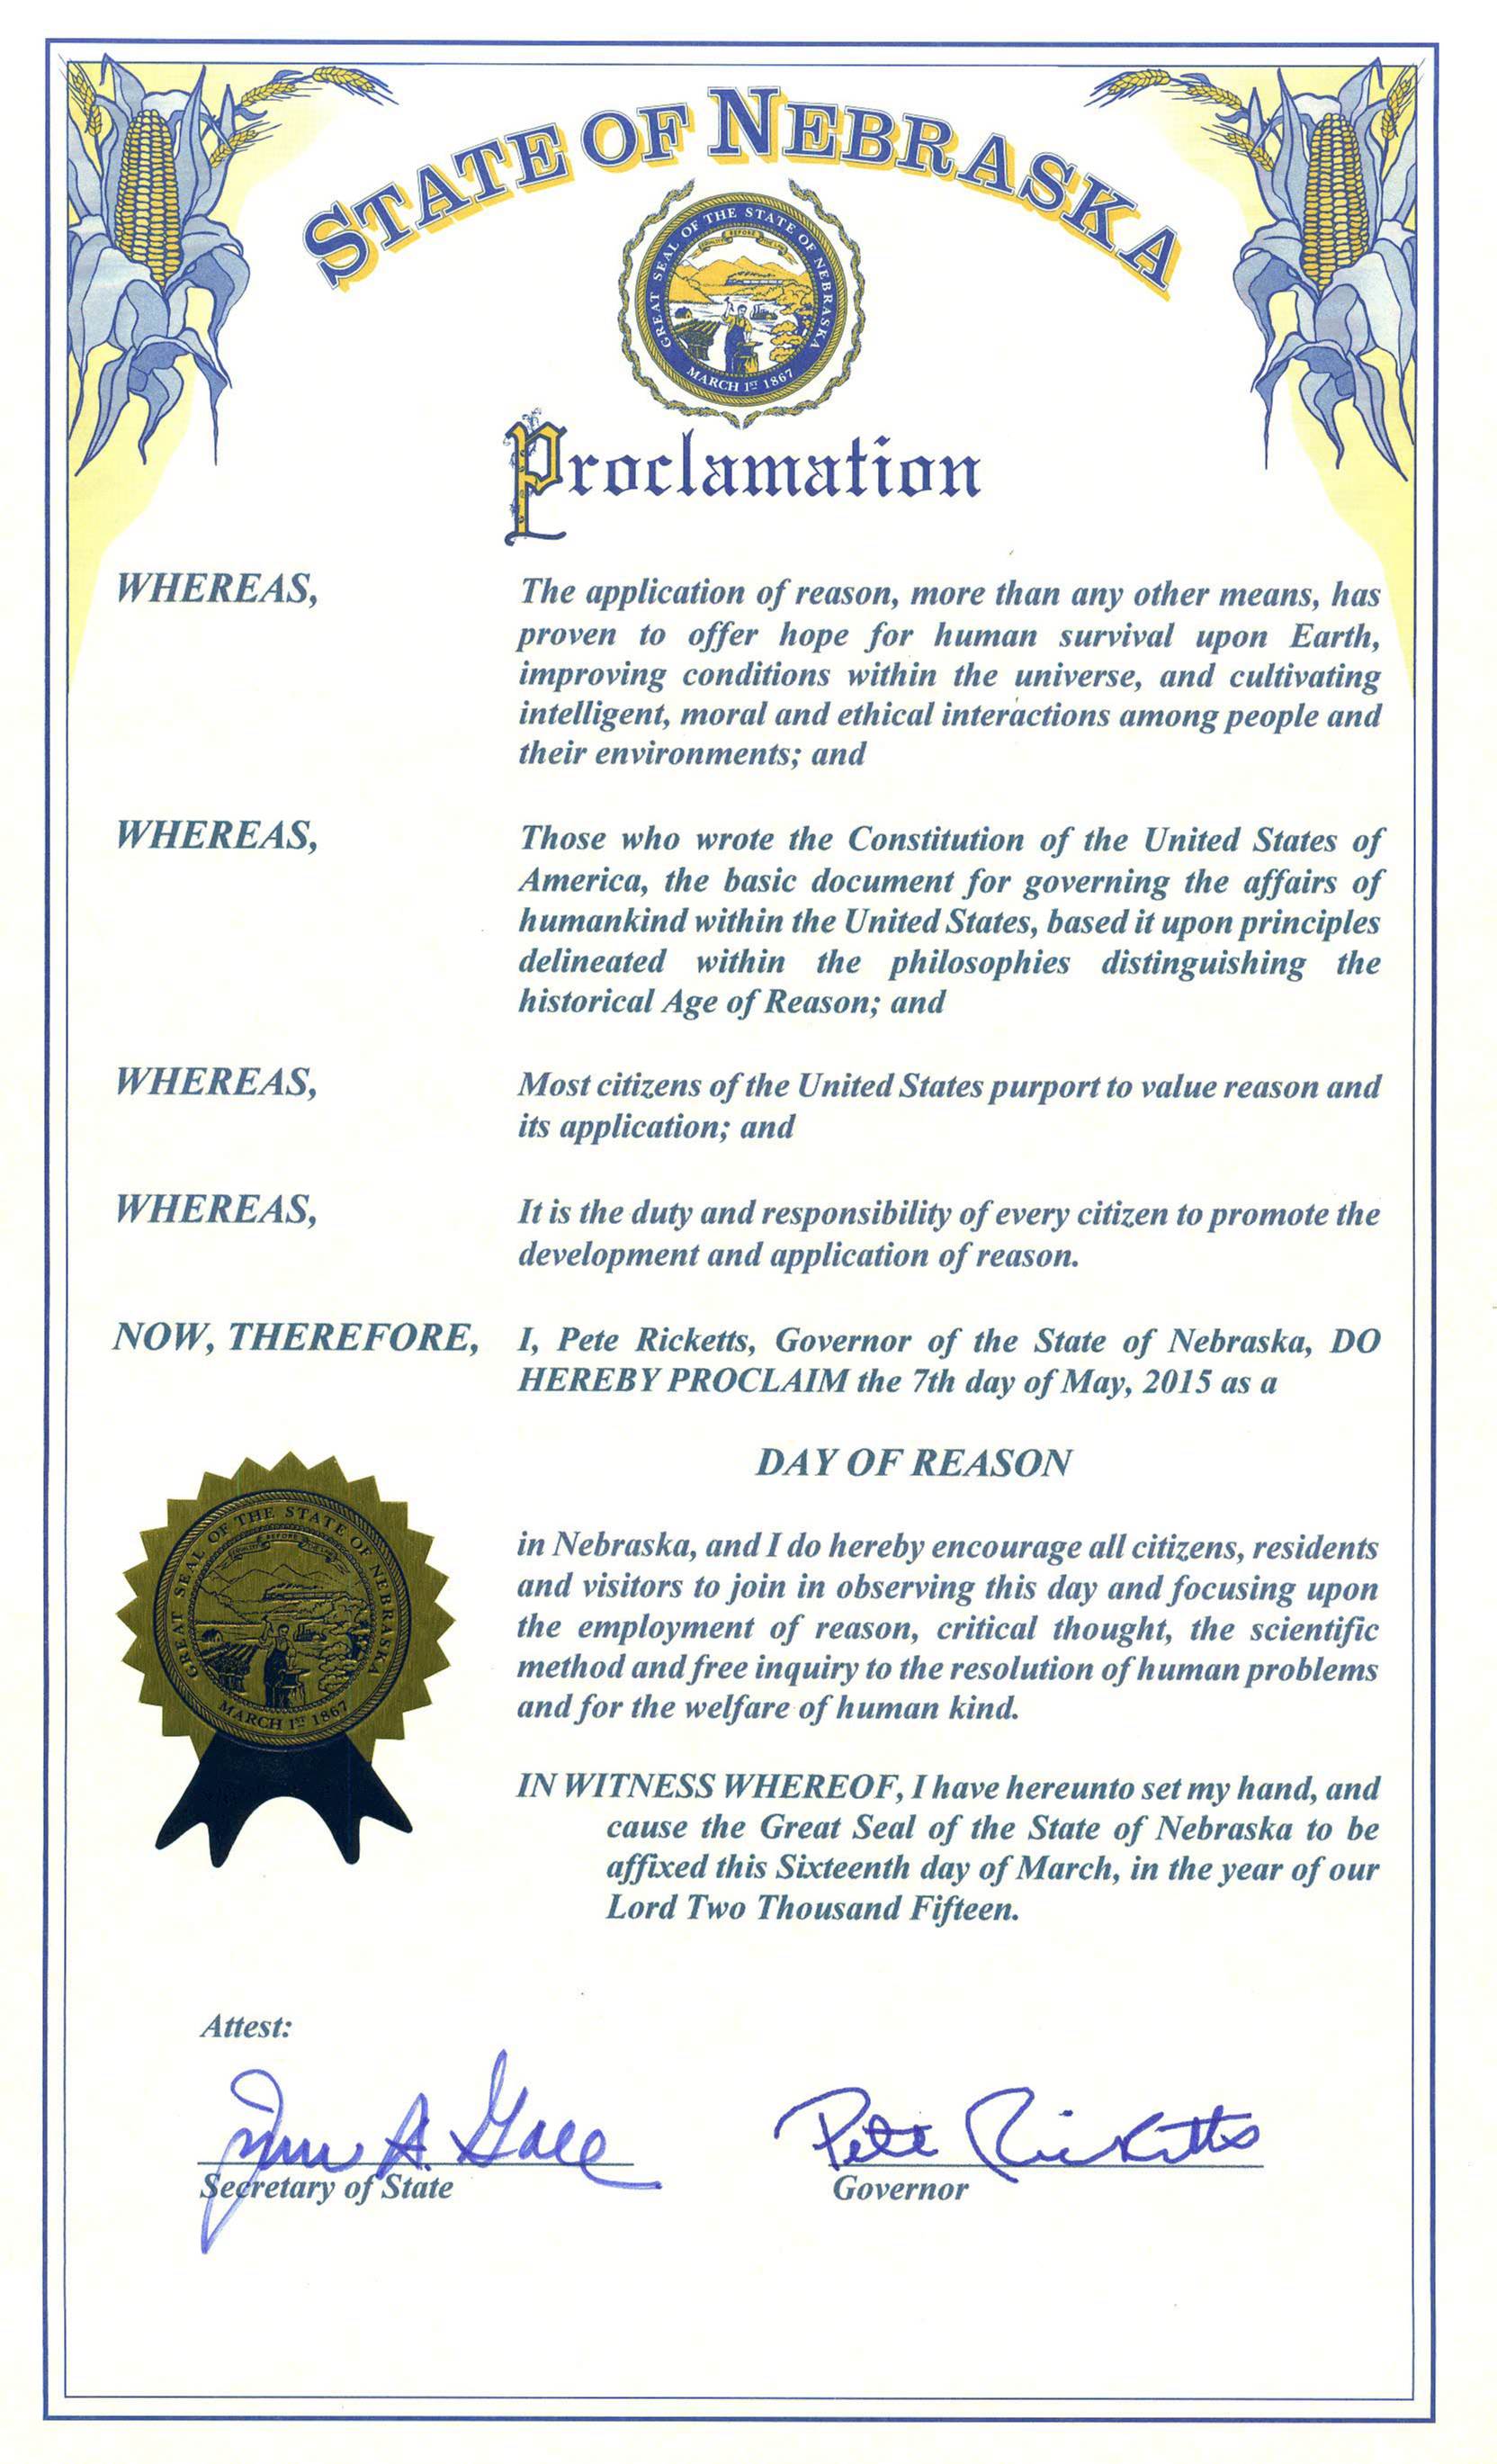 Nebraska's Day of Reason state proclamation